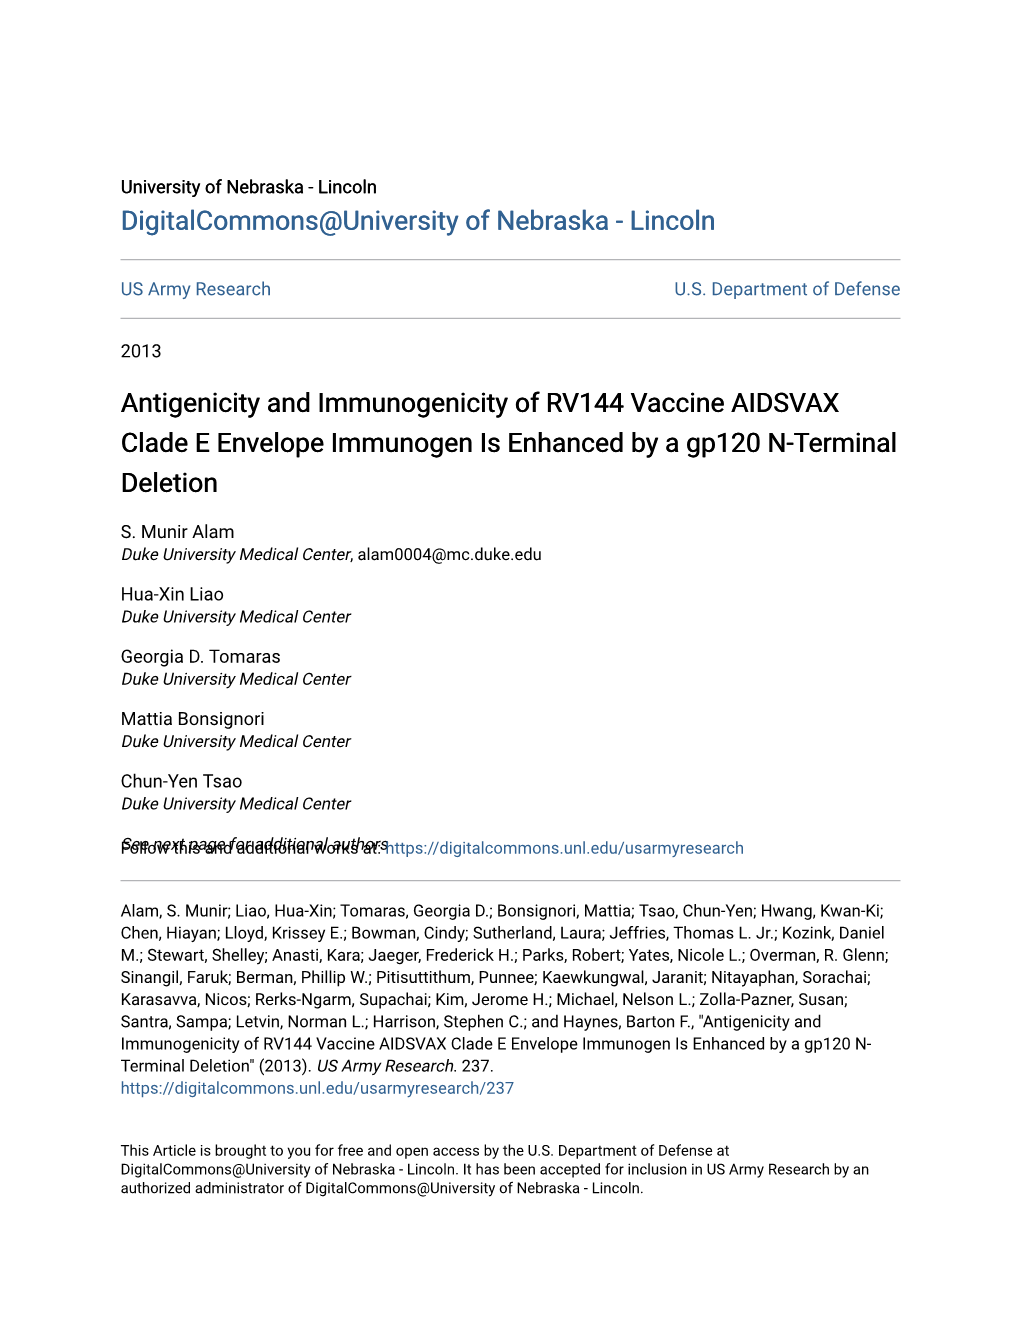 Antigenicity and Immunogenicity of RV144 Vaccine AIDSVAX Clade E Envelope Immunogen Is Enhanced by a Gp120 N-Terminal Deletion